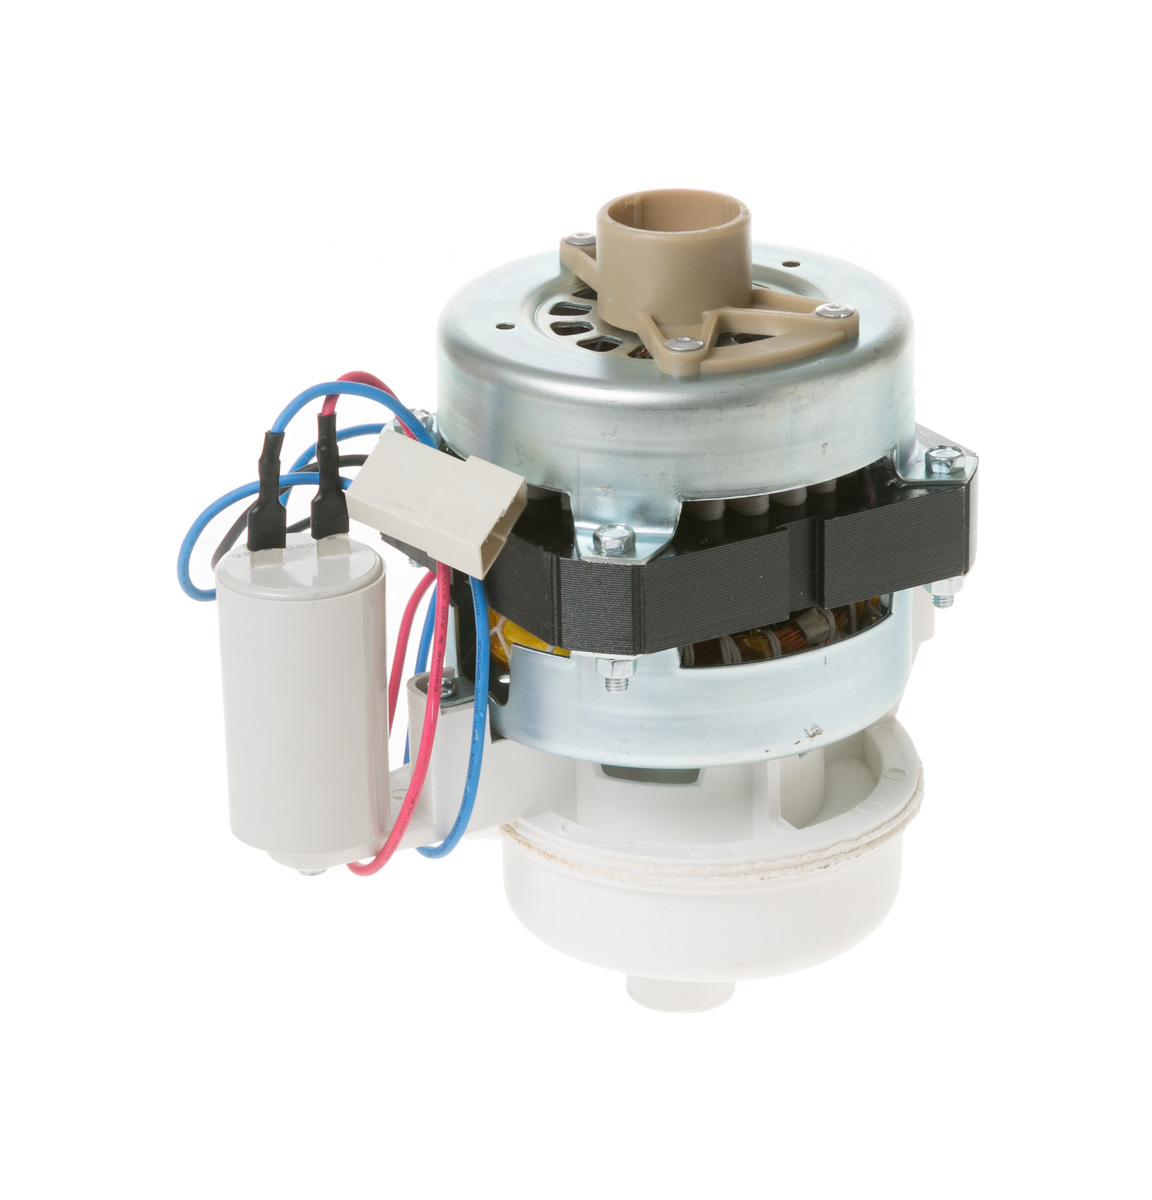 GE Dishwasher Circulation Pump & Motor Assembly. Part #WG04F04758